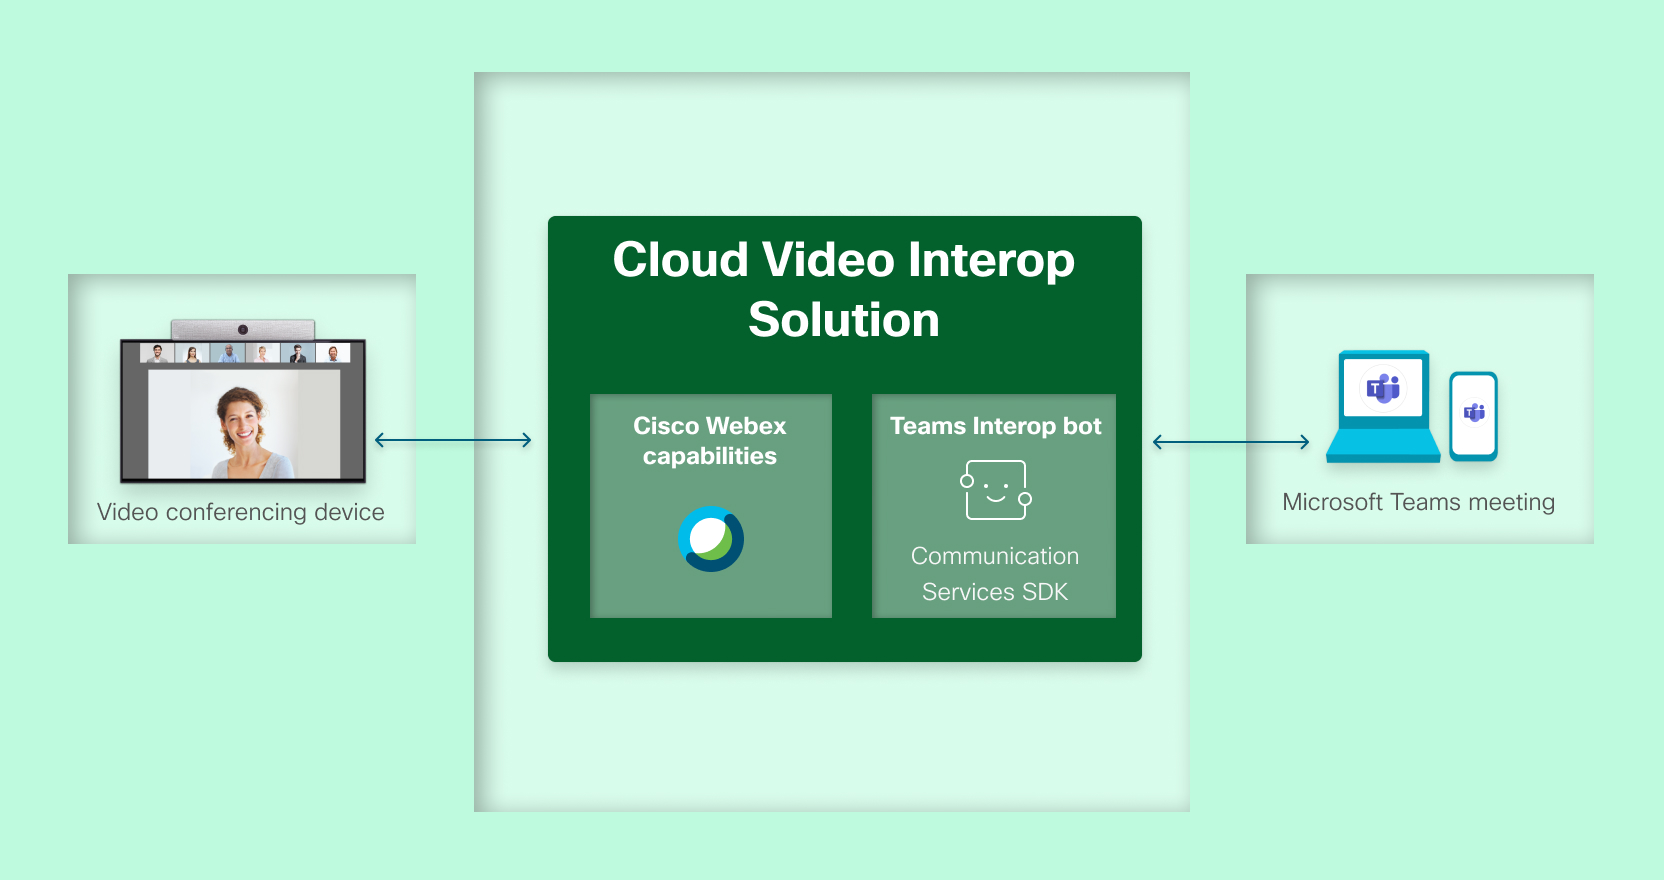 Slika CVI arhitekture na osnovu https://docs.microsoft.com/en-us/microsoftteams/cloud-video-interop